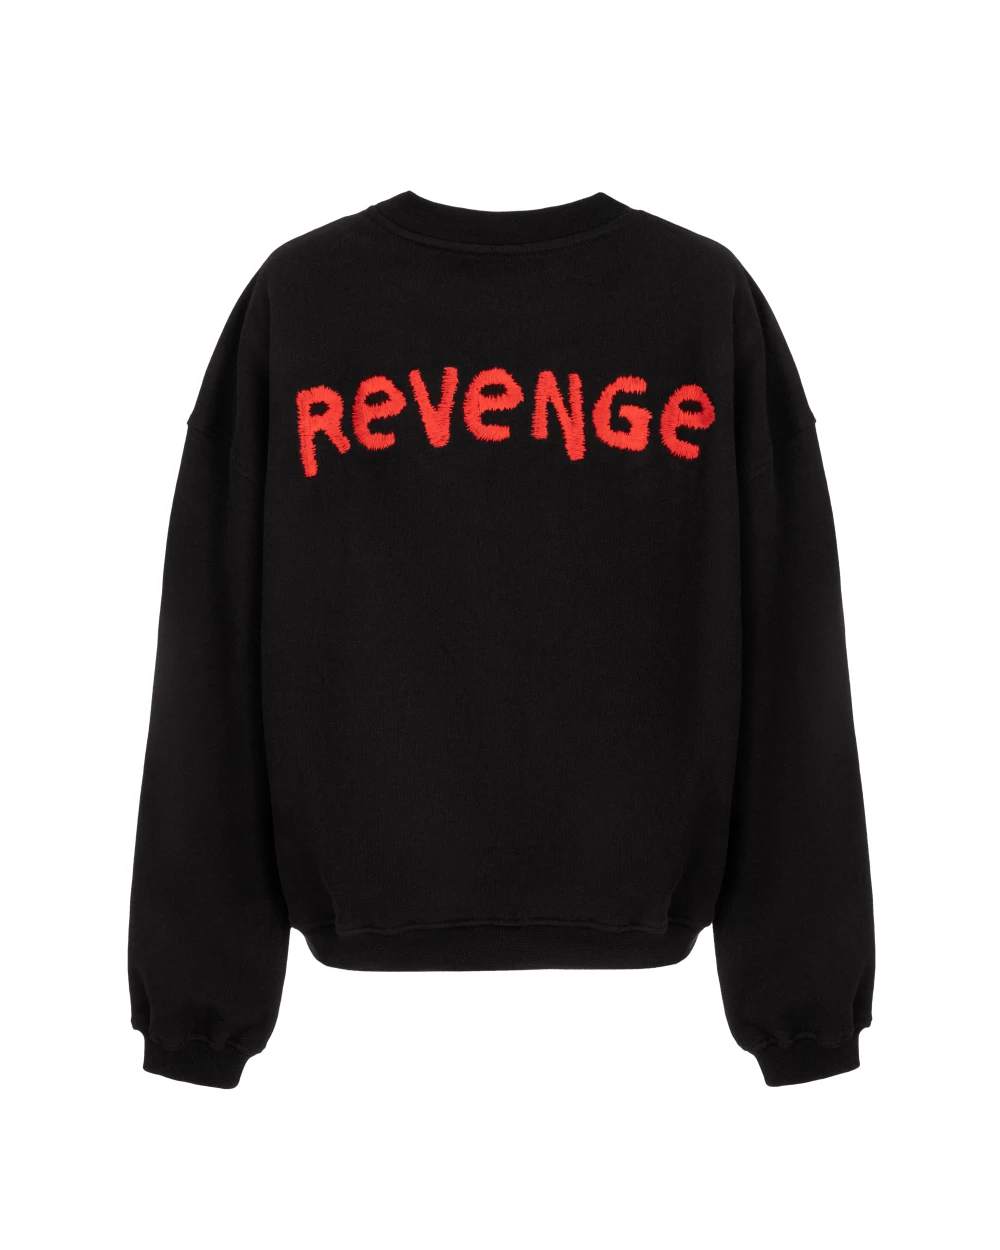 sweatshirt "revenge"  in black color